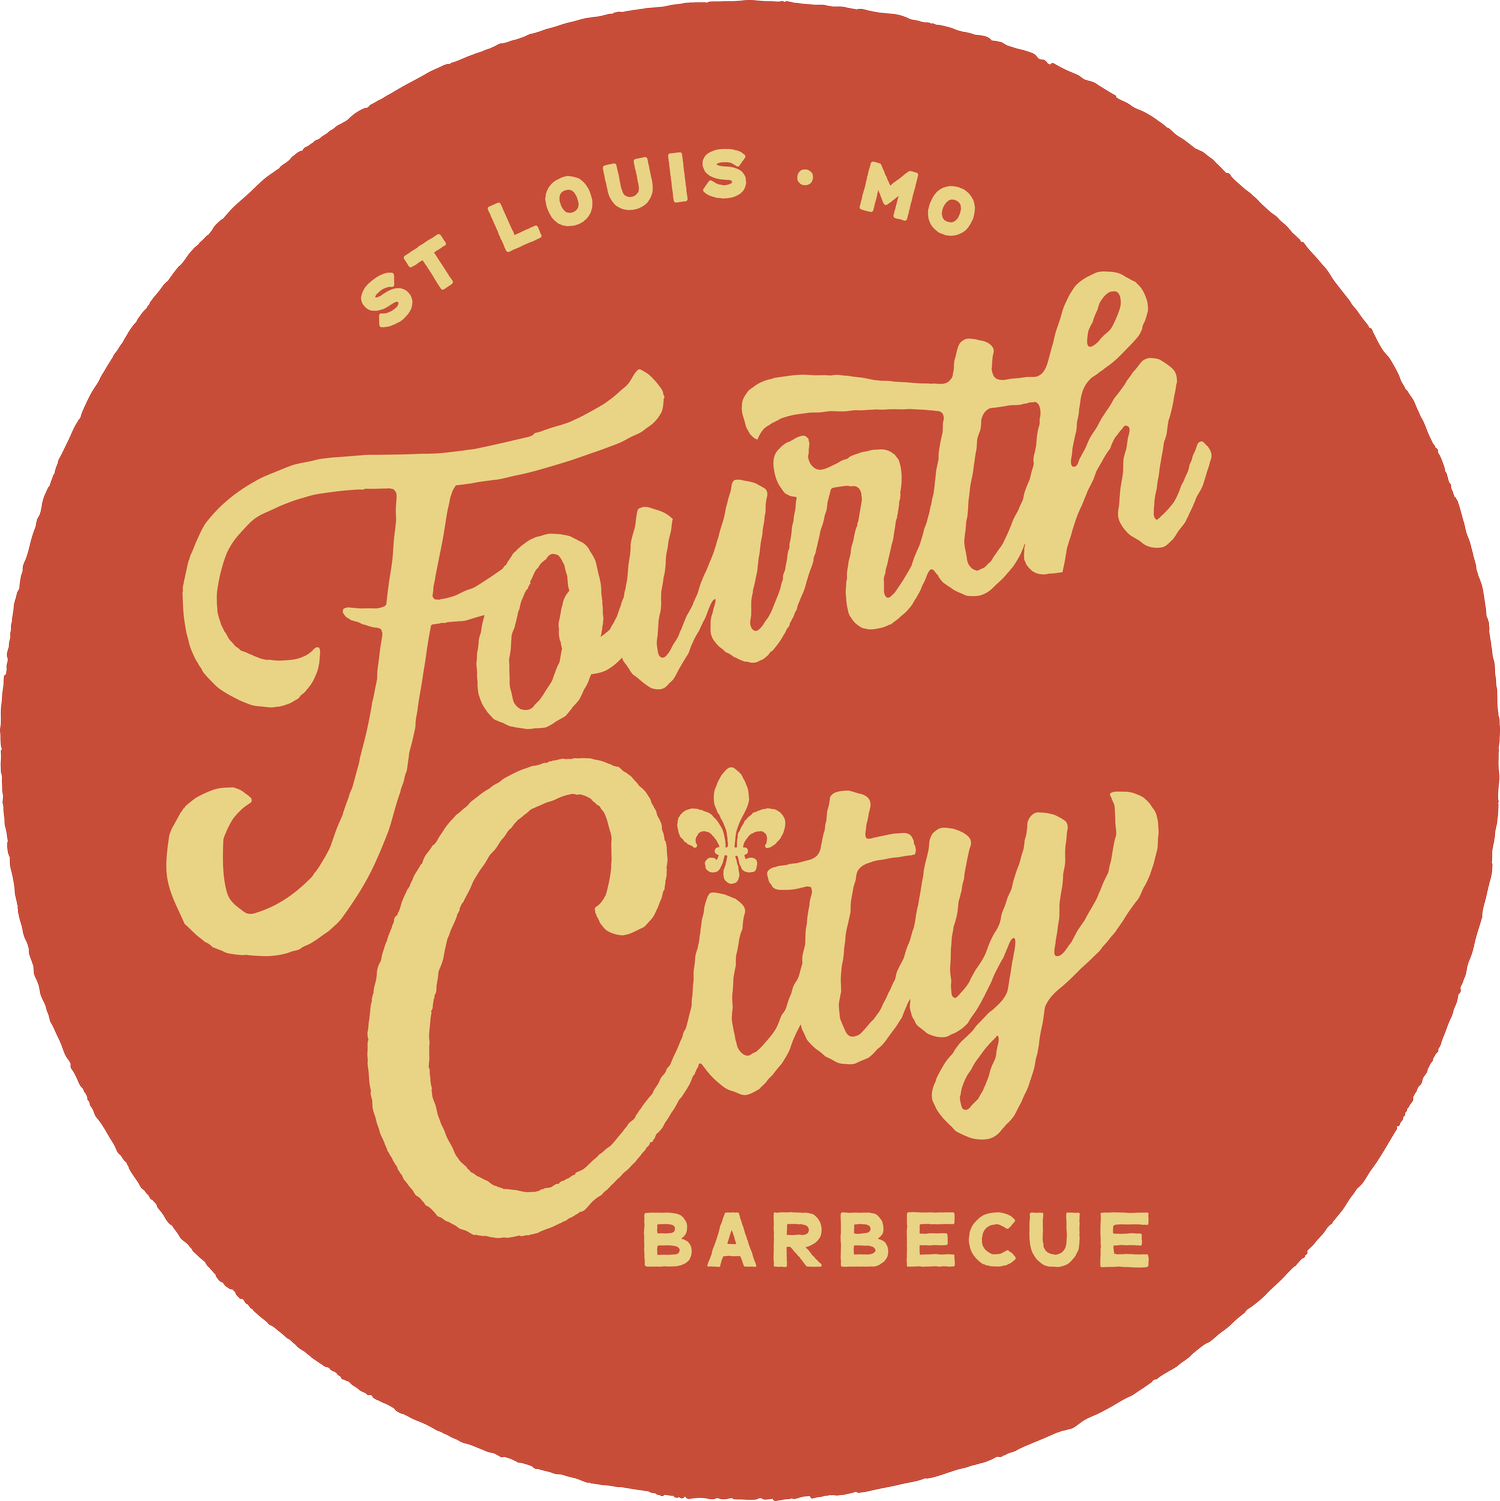 Fourth City Barbecue